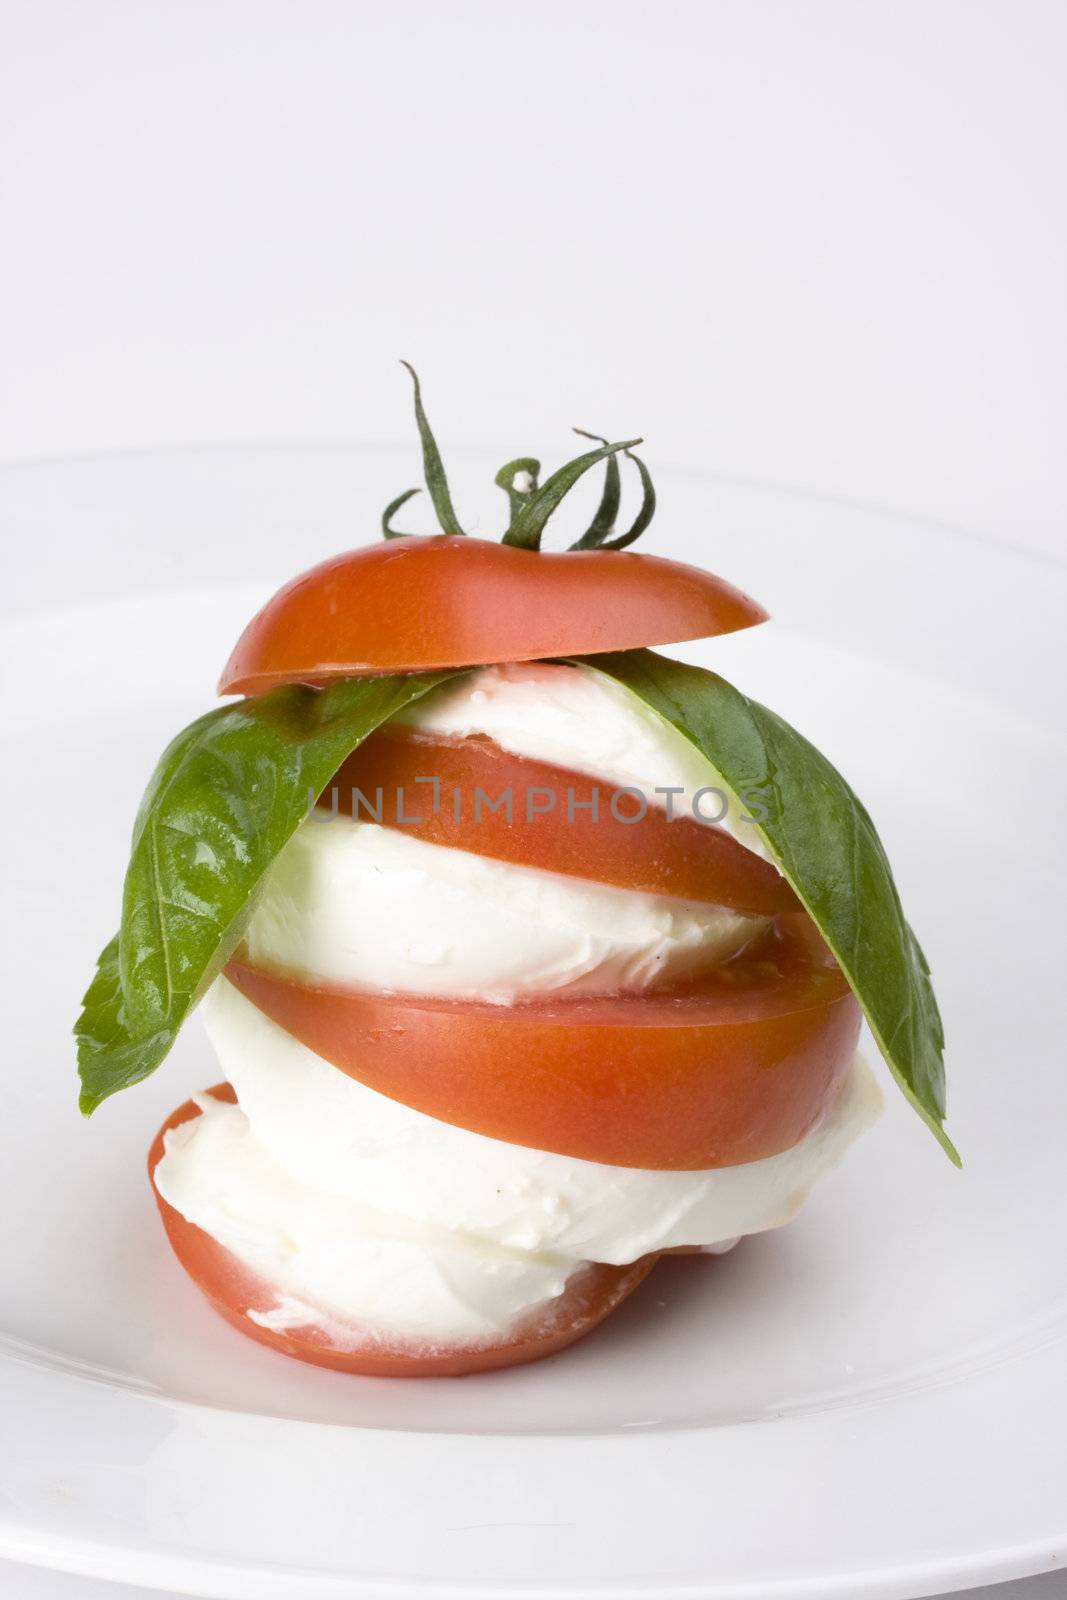 caprese: tomatoe, basil and mozarella cheese by bernjuer